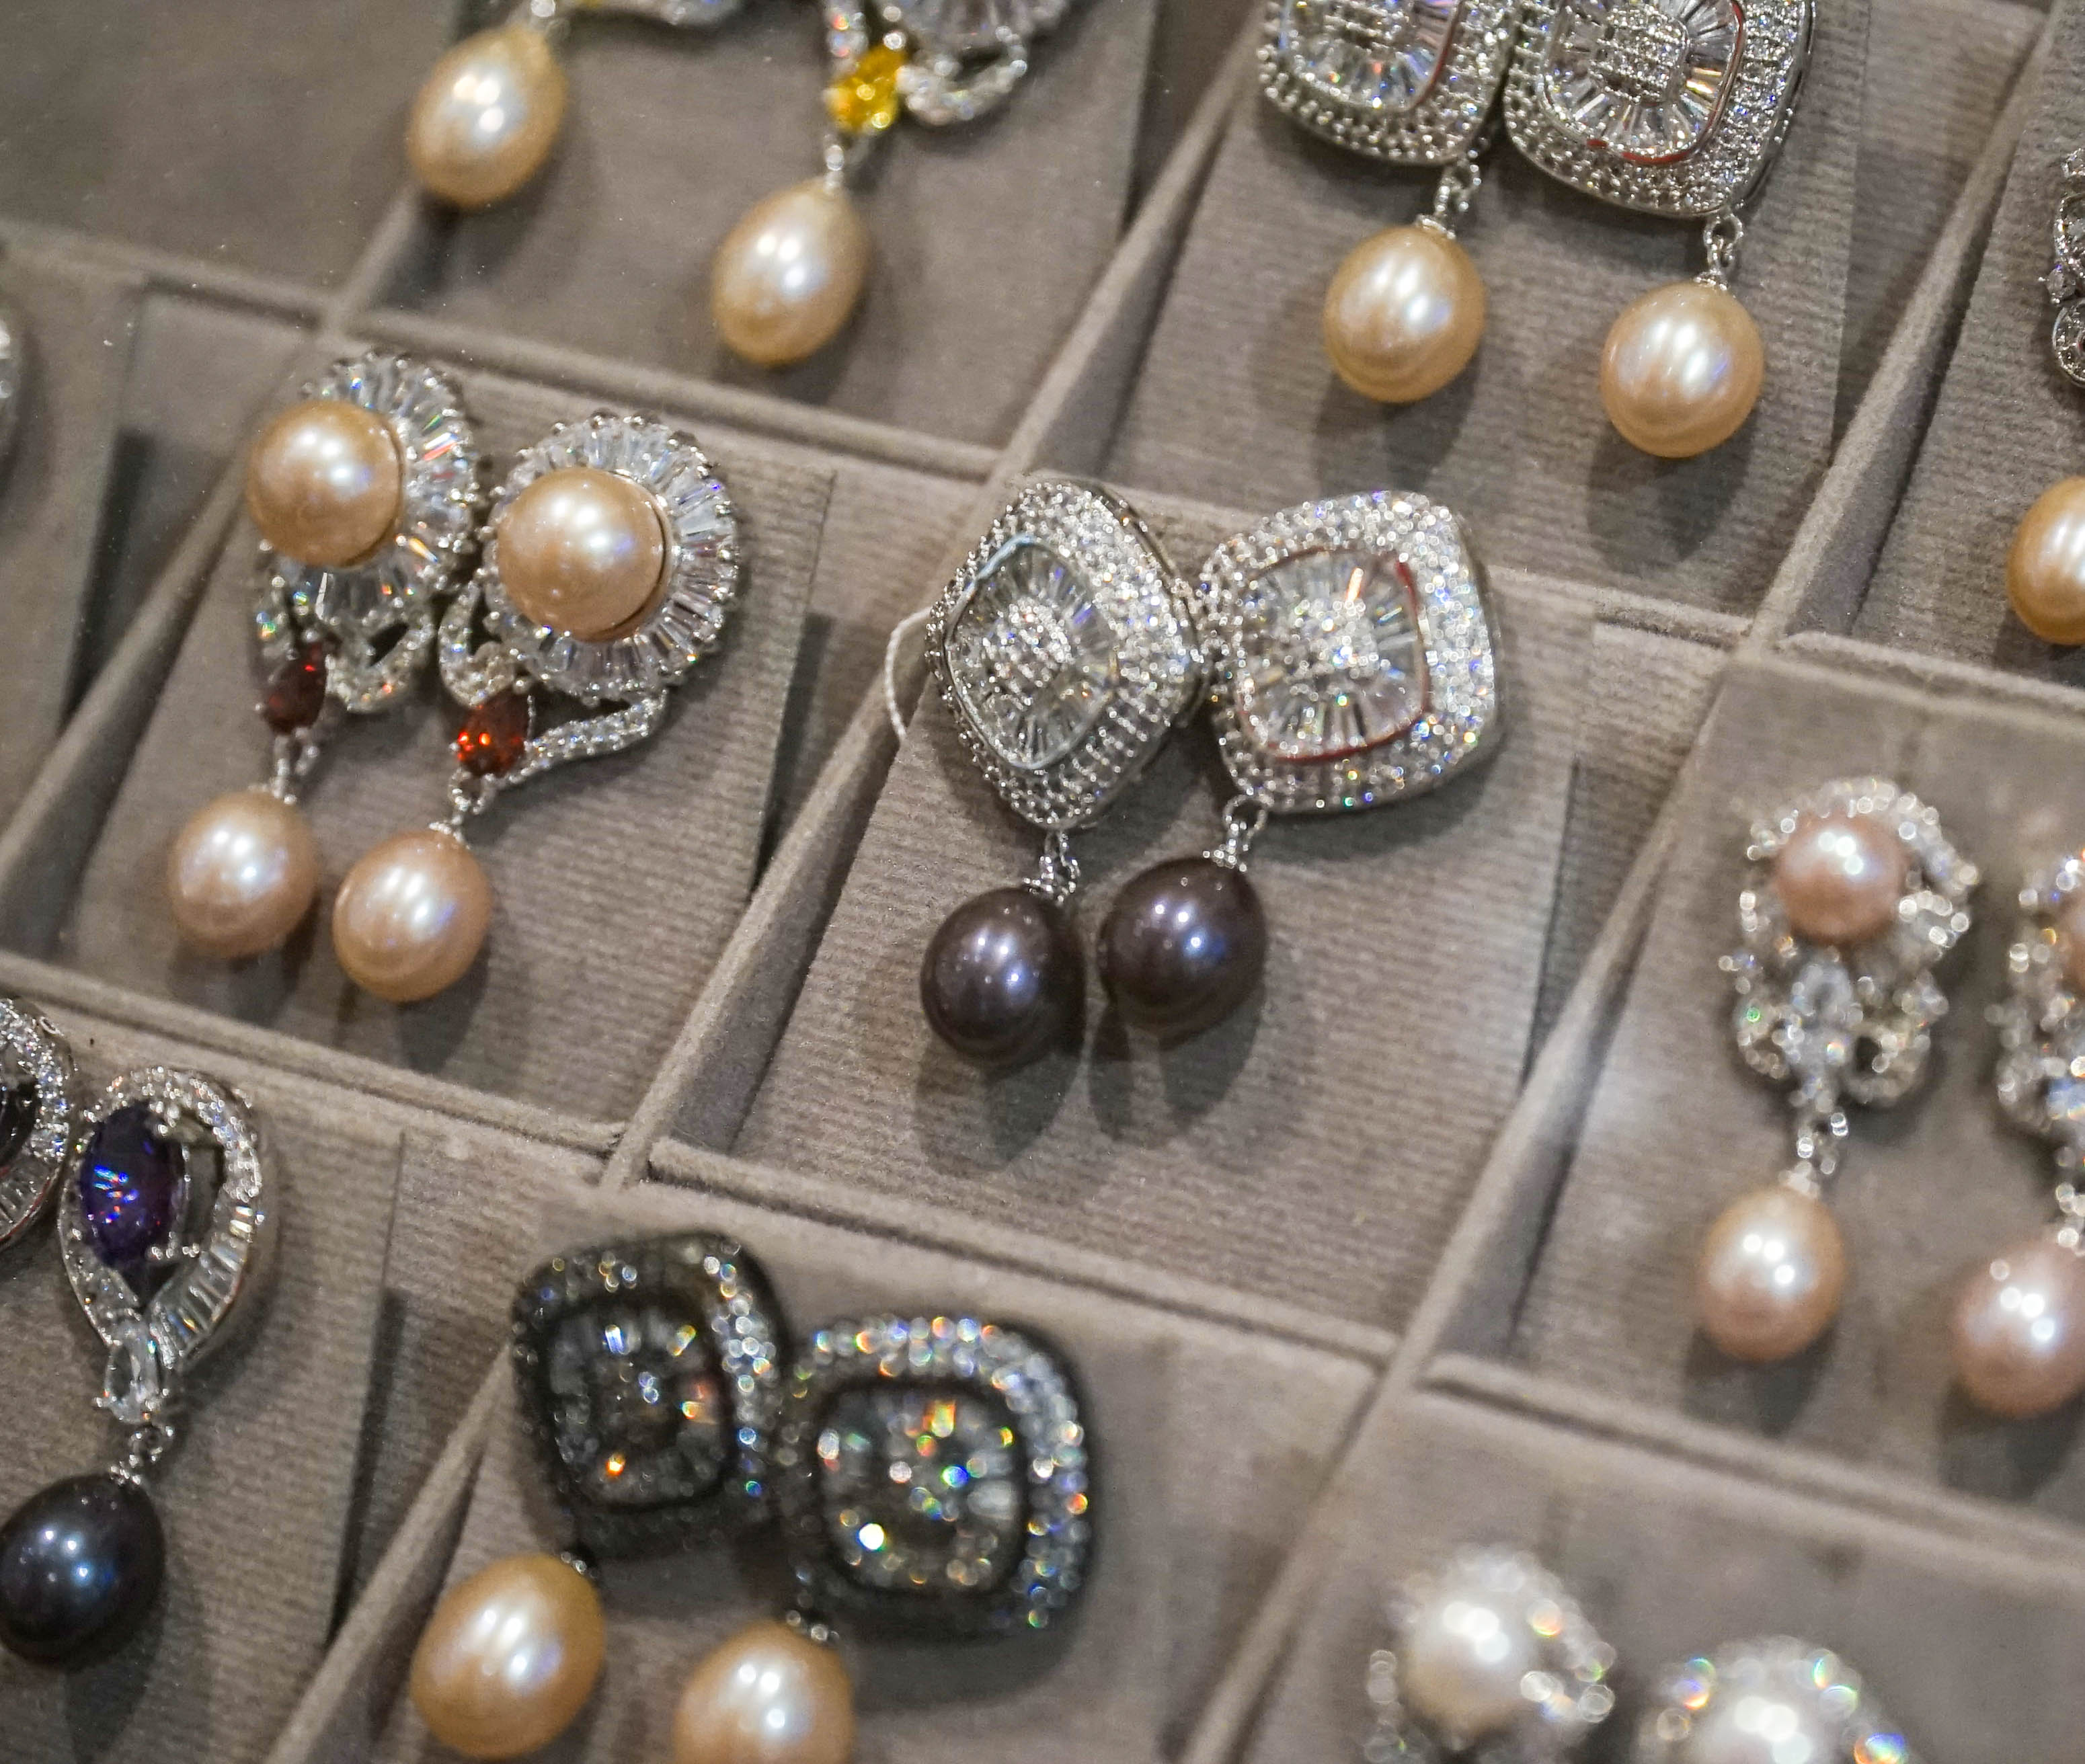 Borneo Pearls